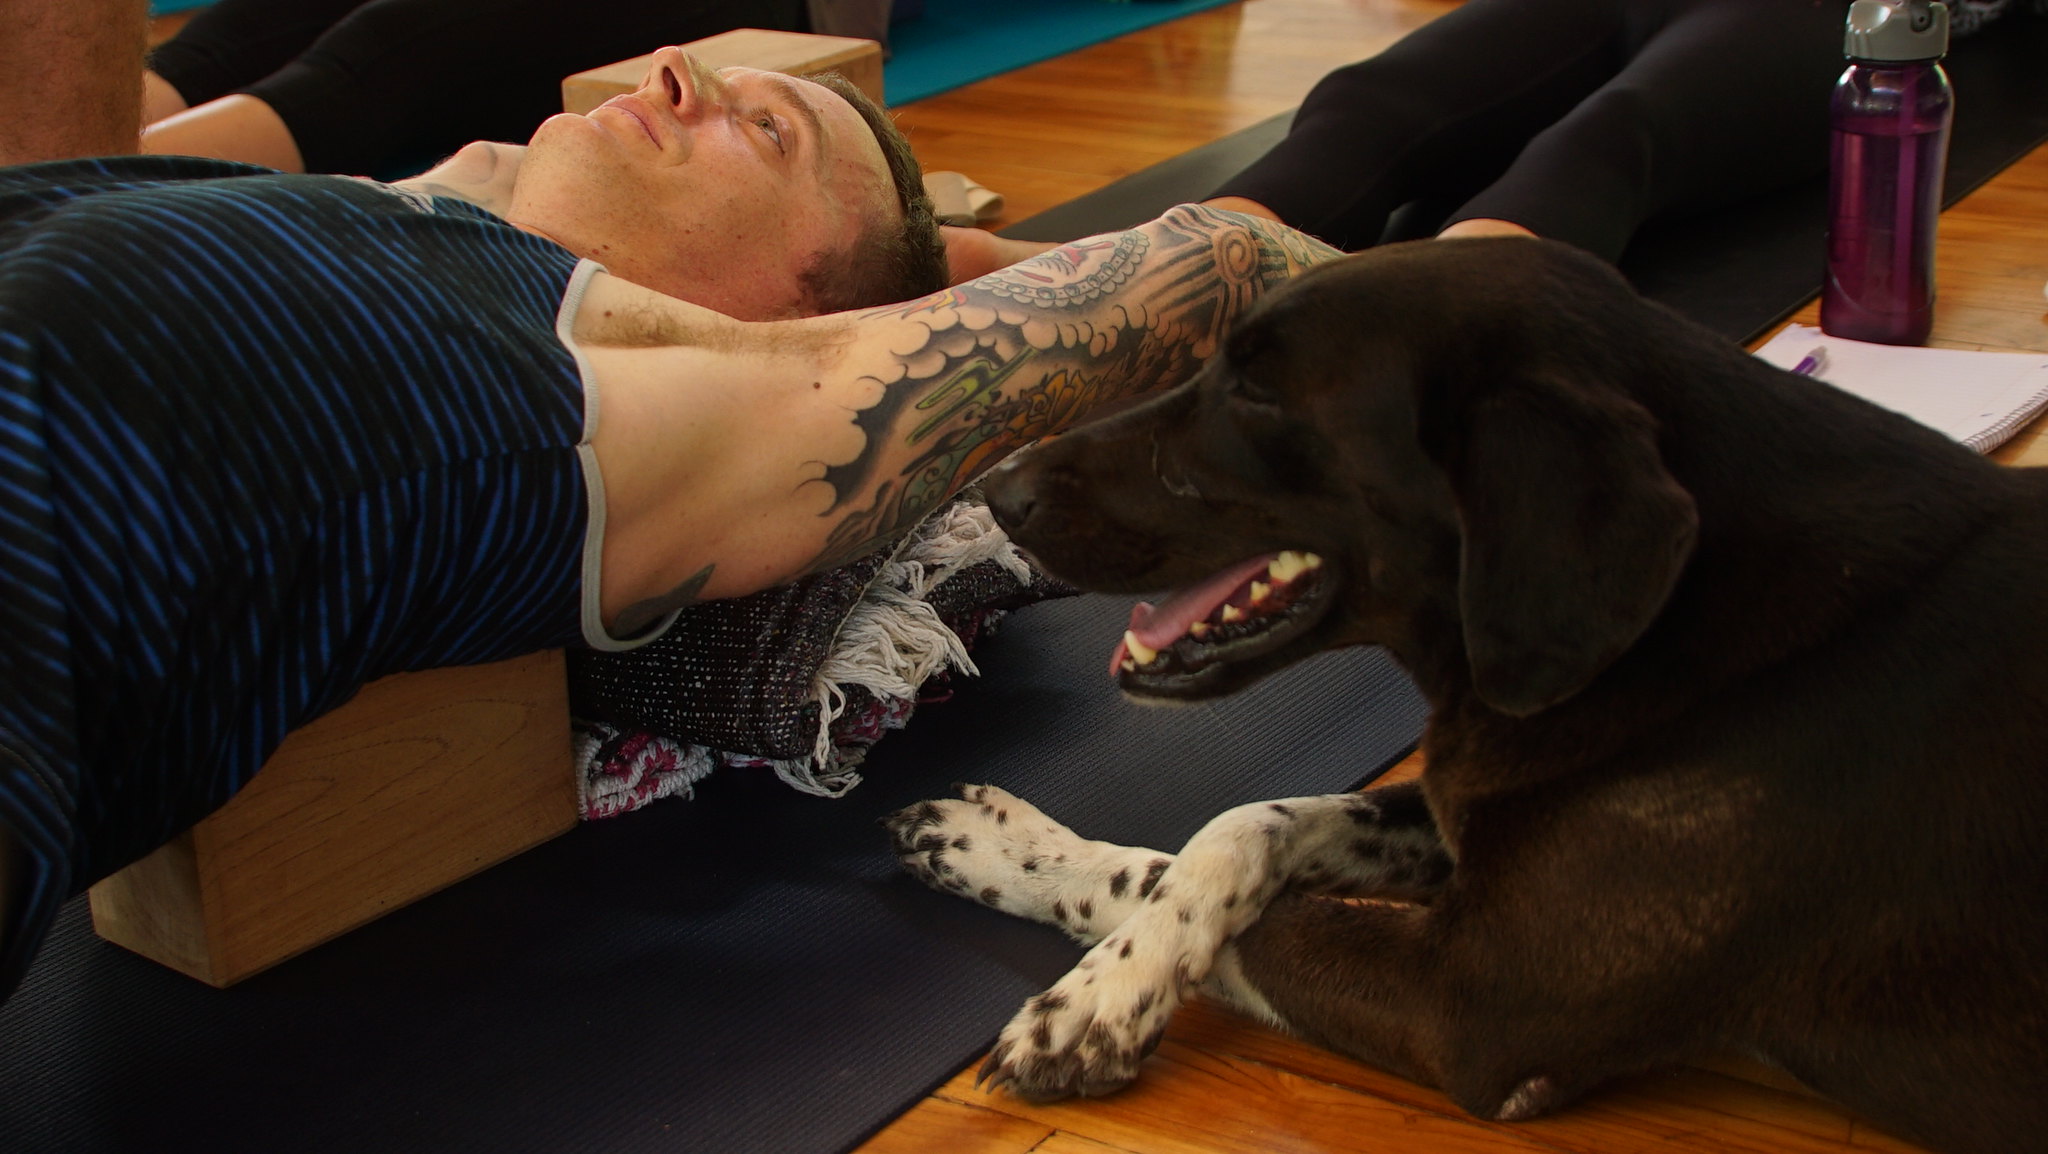 One-Month Immersion Yoga Teacher Training Costa Rica